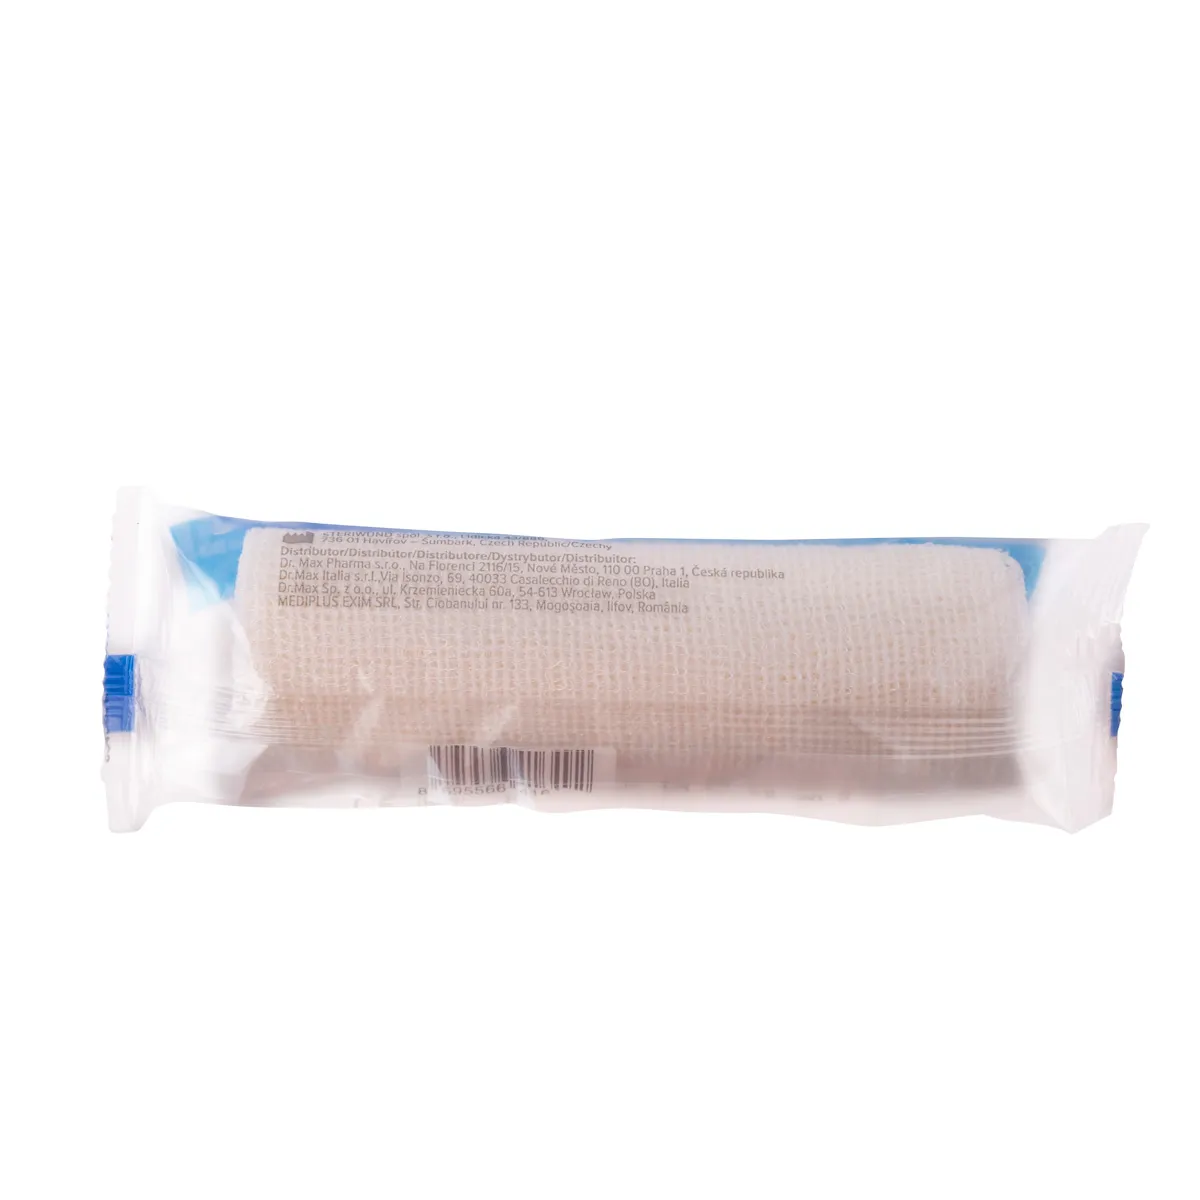 Dr.Max Elastic Fixation Bandage 12 cm x 4 m Benda Elastica Per la Medicazione delle Ferite